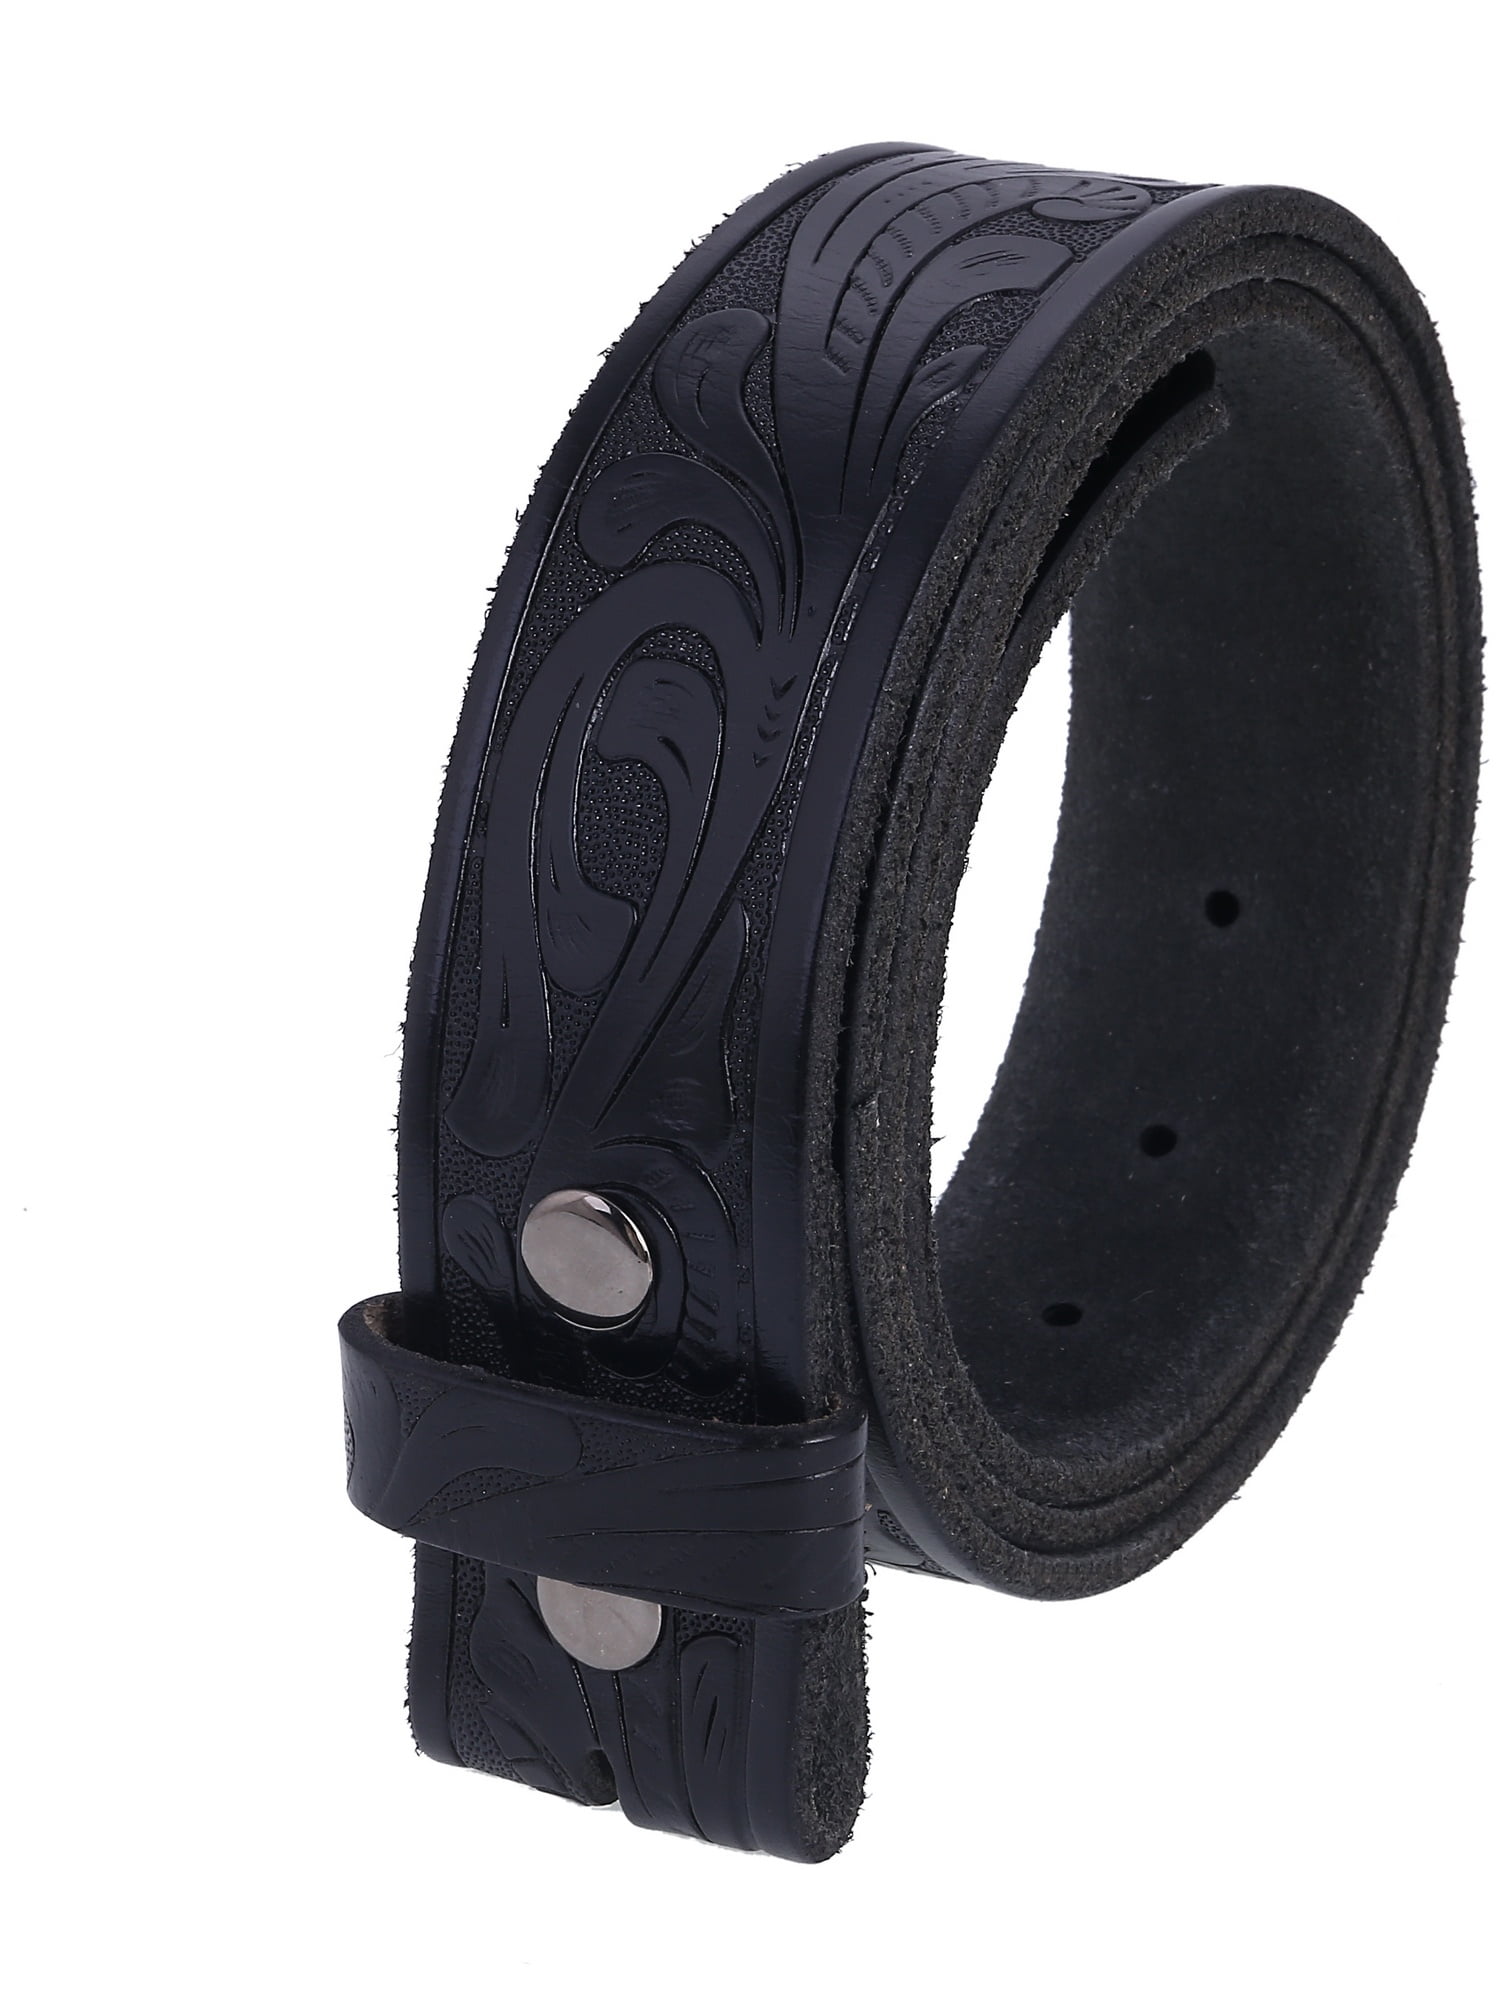 Men's Genuine Leather Metal Buckle Casual Dress Comfort Jean Belt Black M L XL 